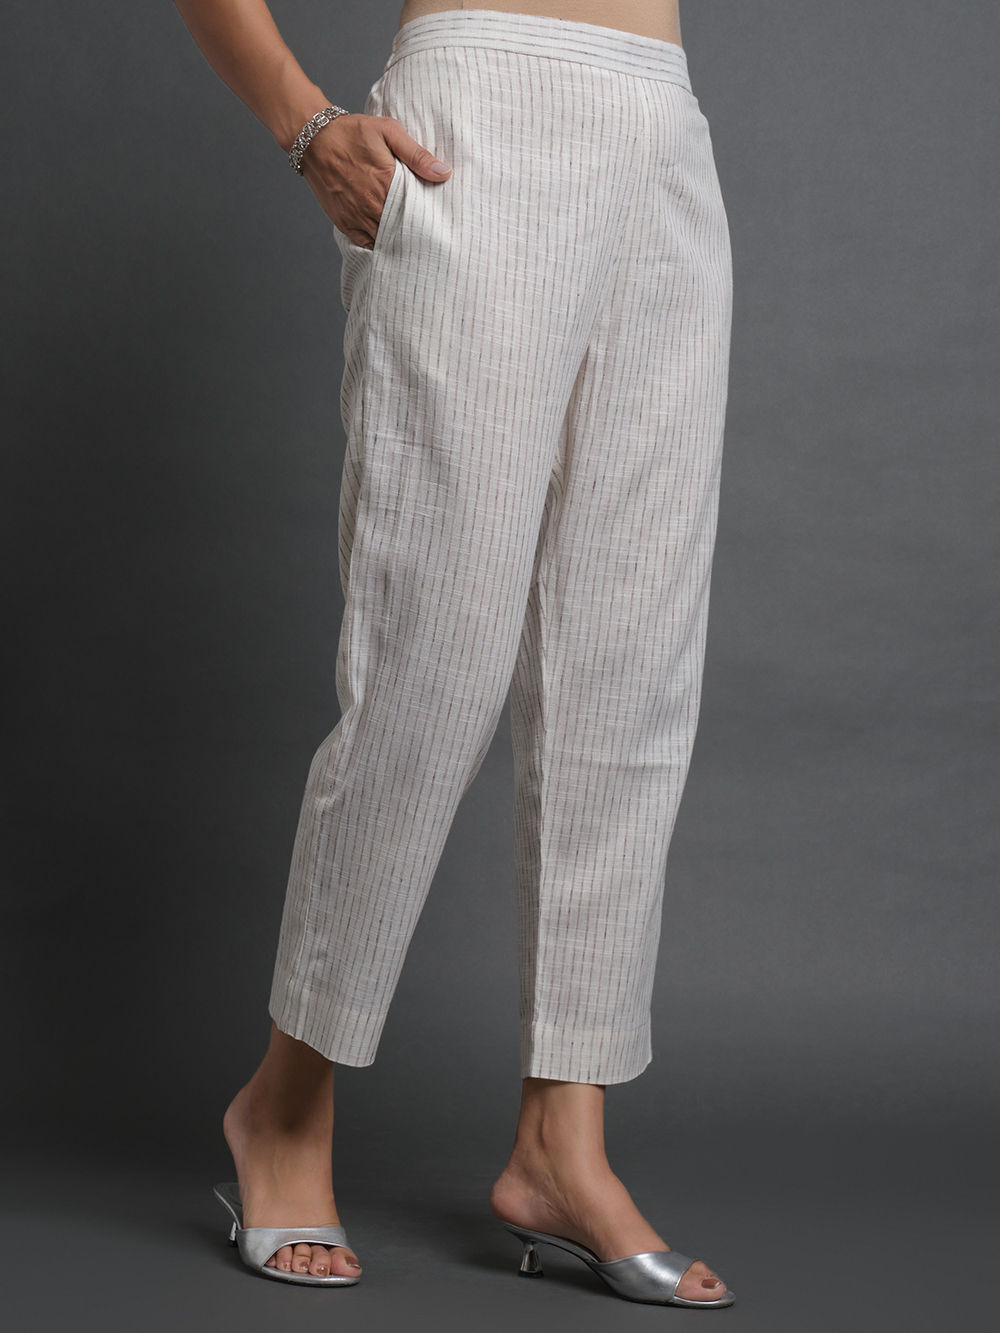 Block Print Pants- Buy Women's Palazzo Pants Online & Trousers | The Loom